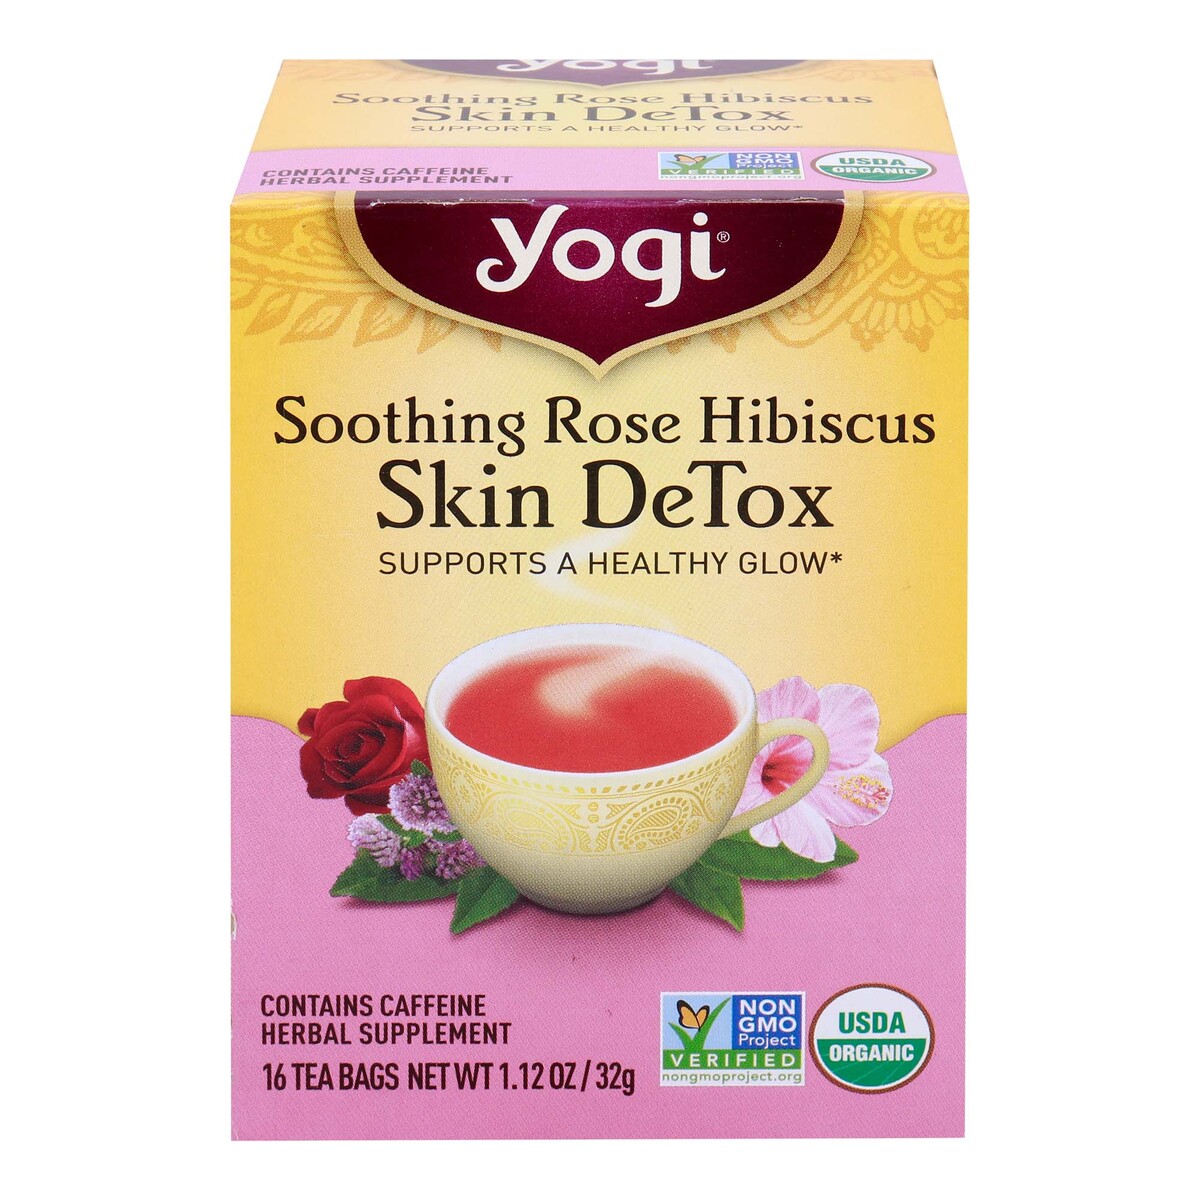 Yogi Soothing Rose Hibiscus Skin Detox Tea 16 tea bags 32 g